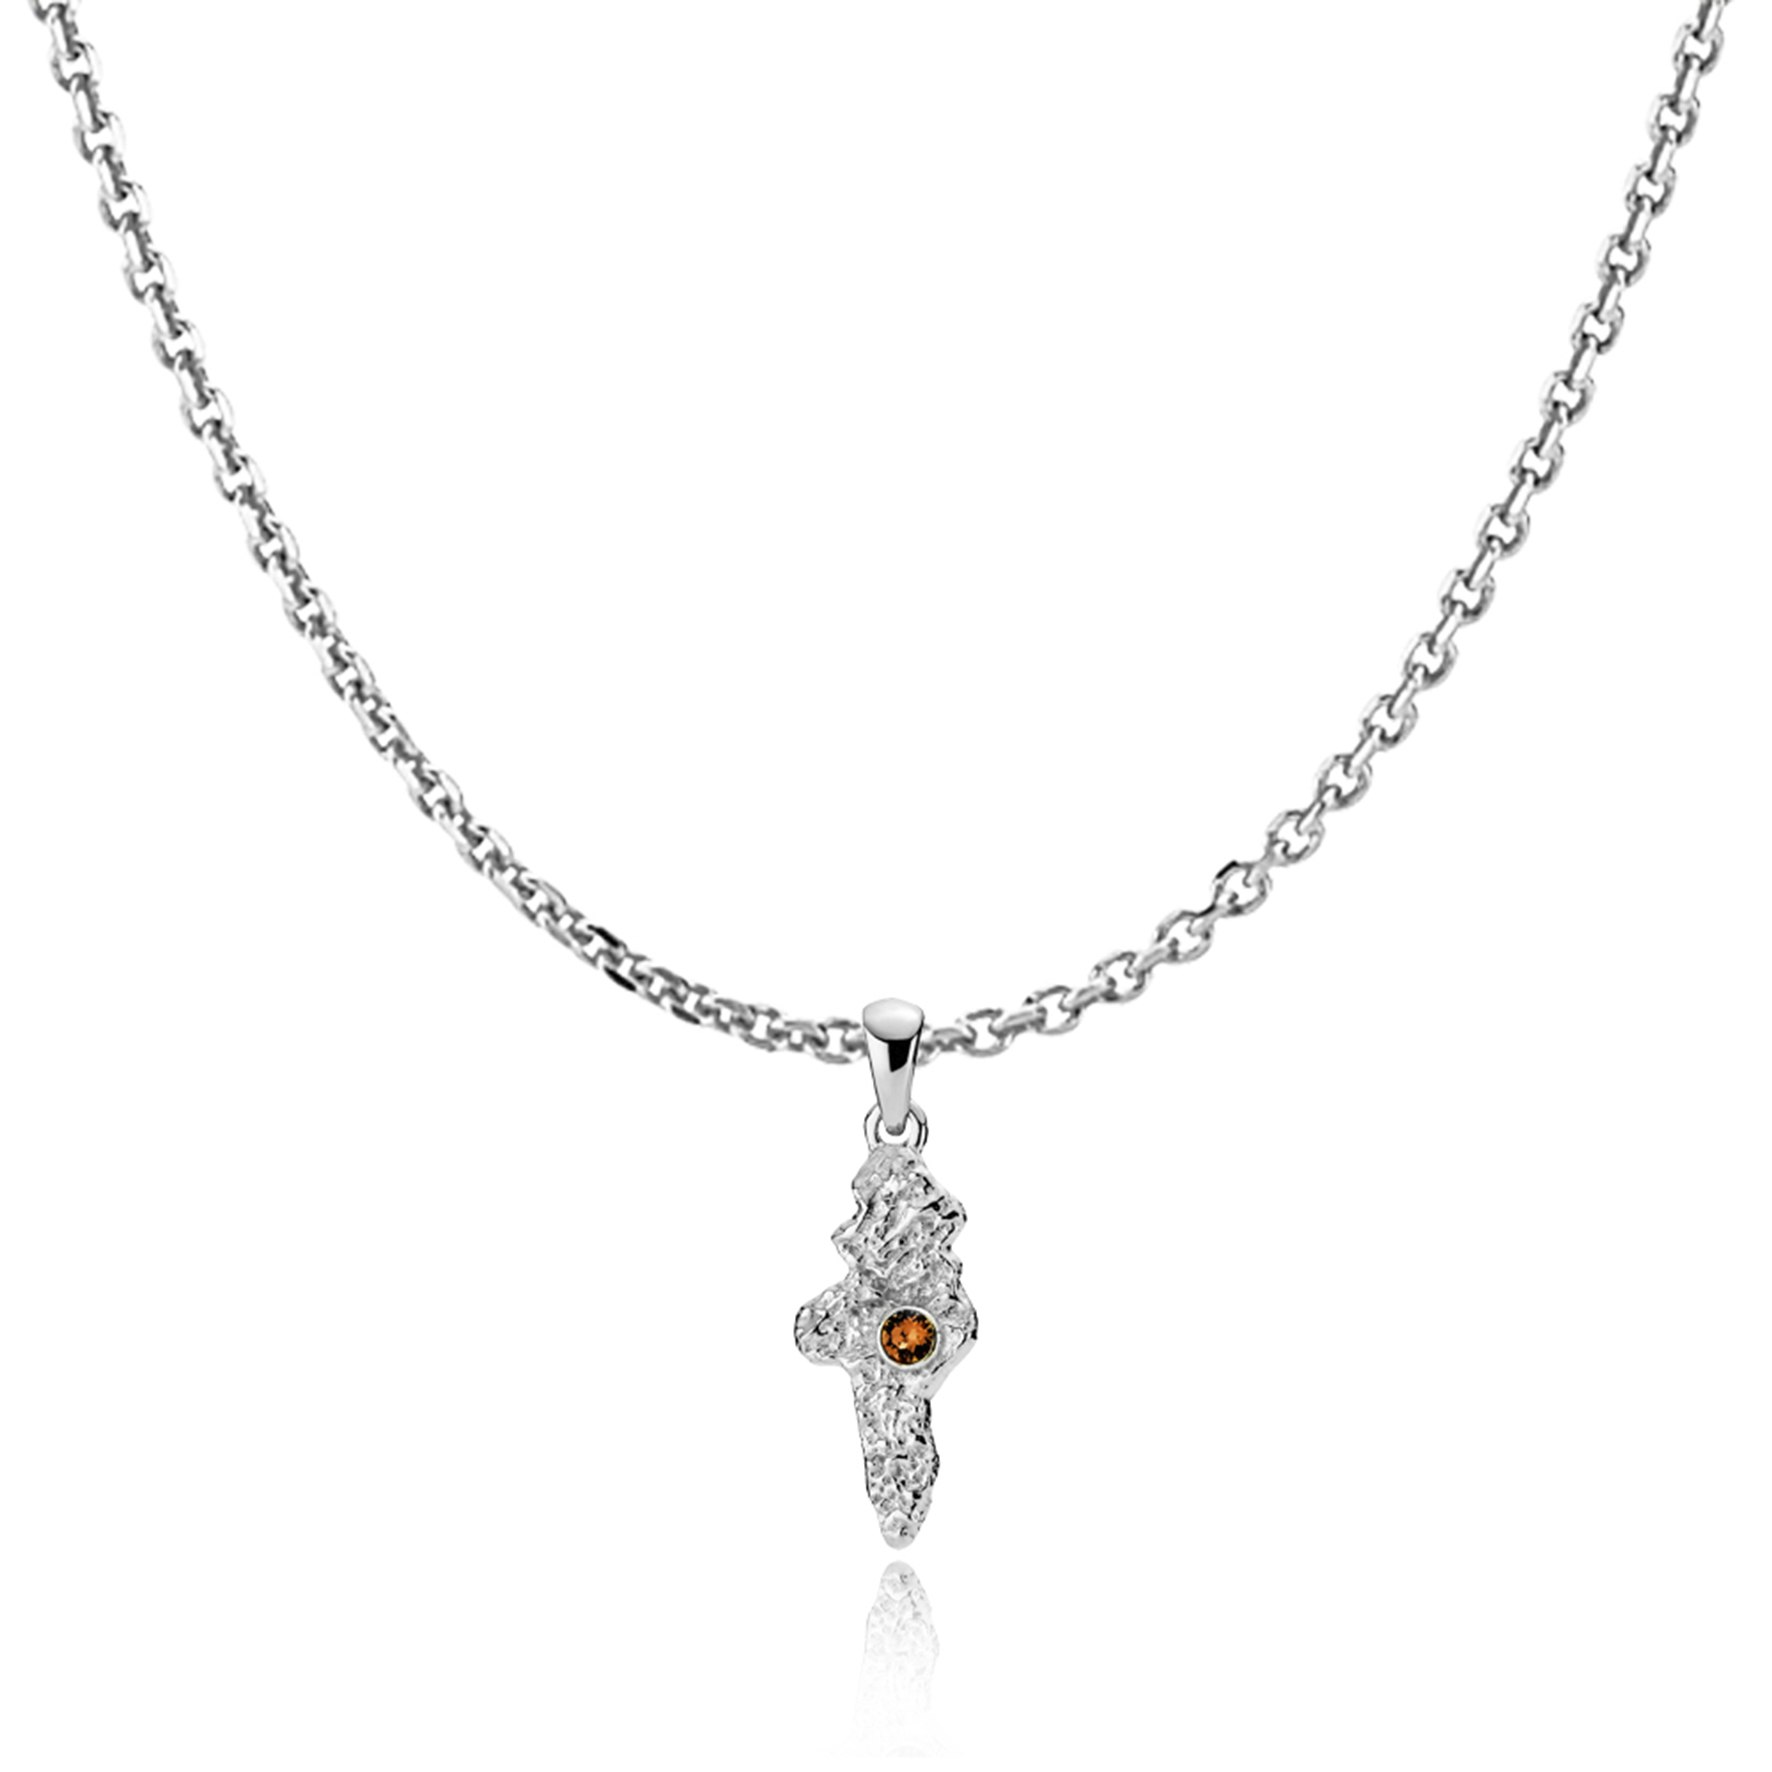 Silke By Sistie Pendant Necklace från Sistie i Silver Sterling 925